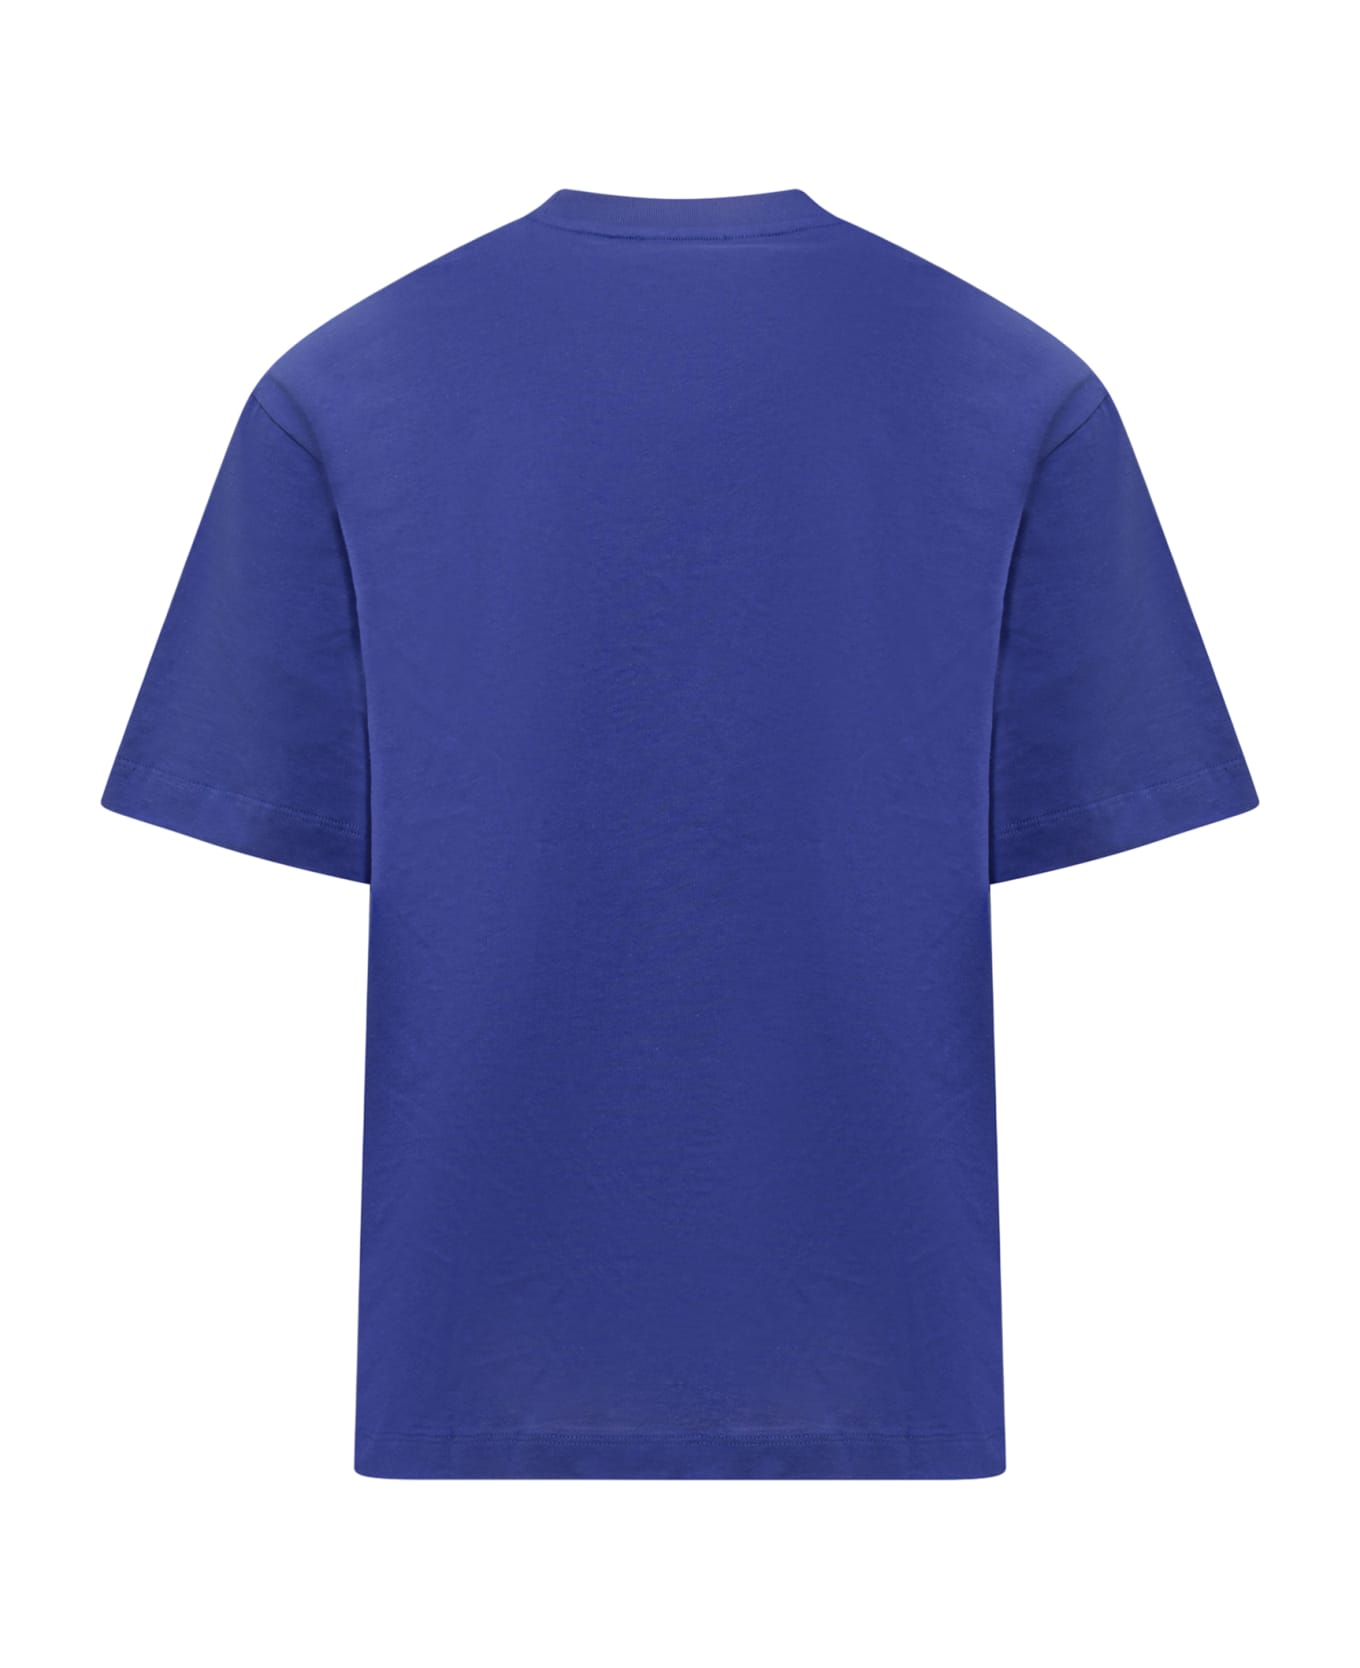 Off-White Body Stitch Skate T-shirt - blue